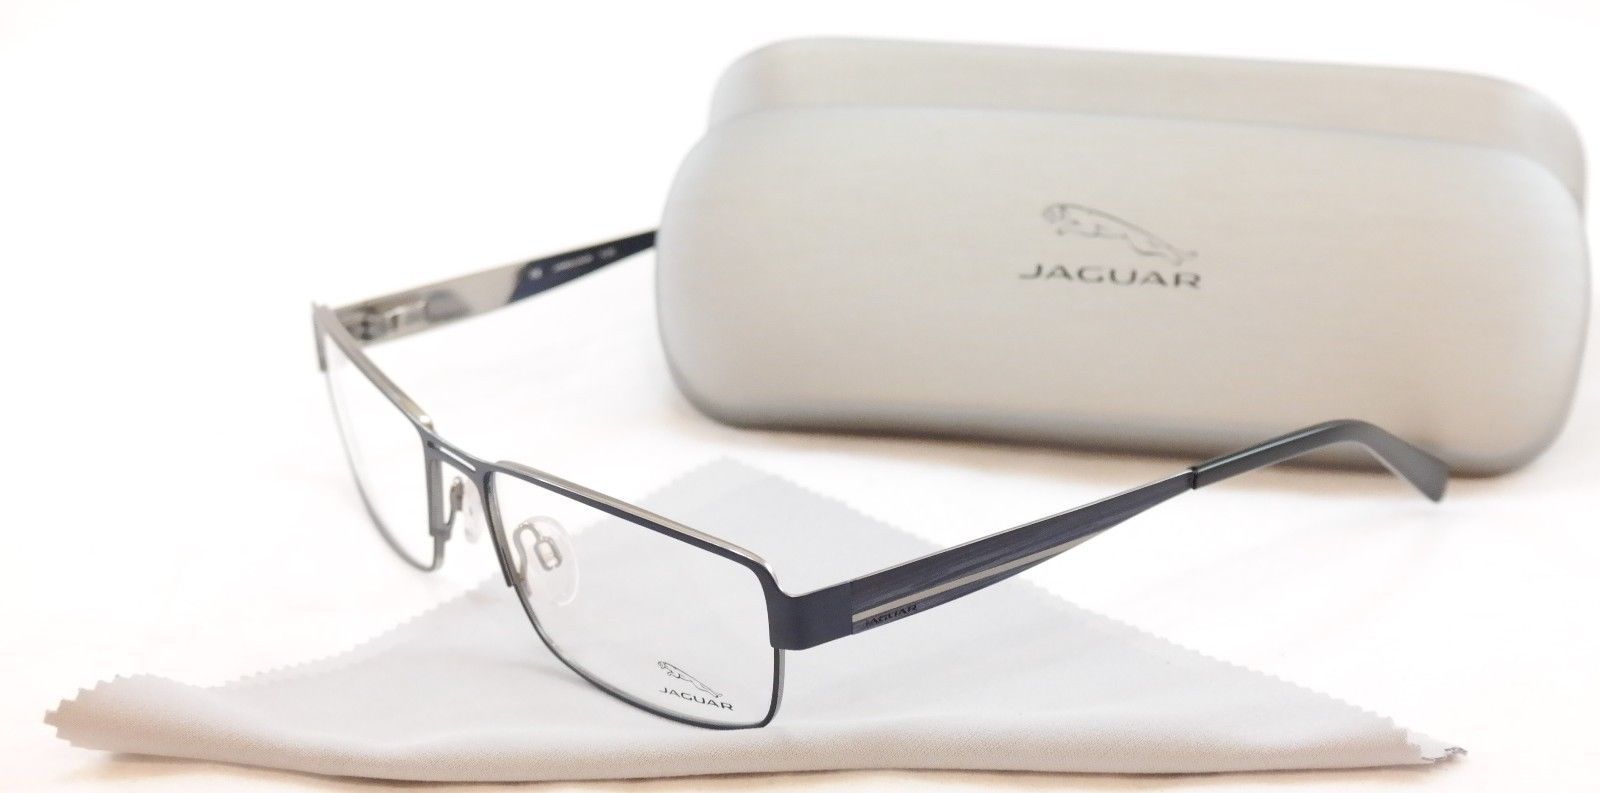 Authentic Jaguar Eyeglasses Frame 33058-819 Blue Metal High Quality Germany Made - $158.85